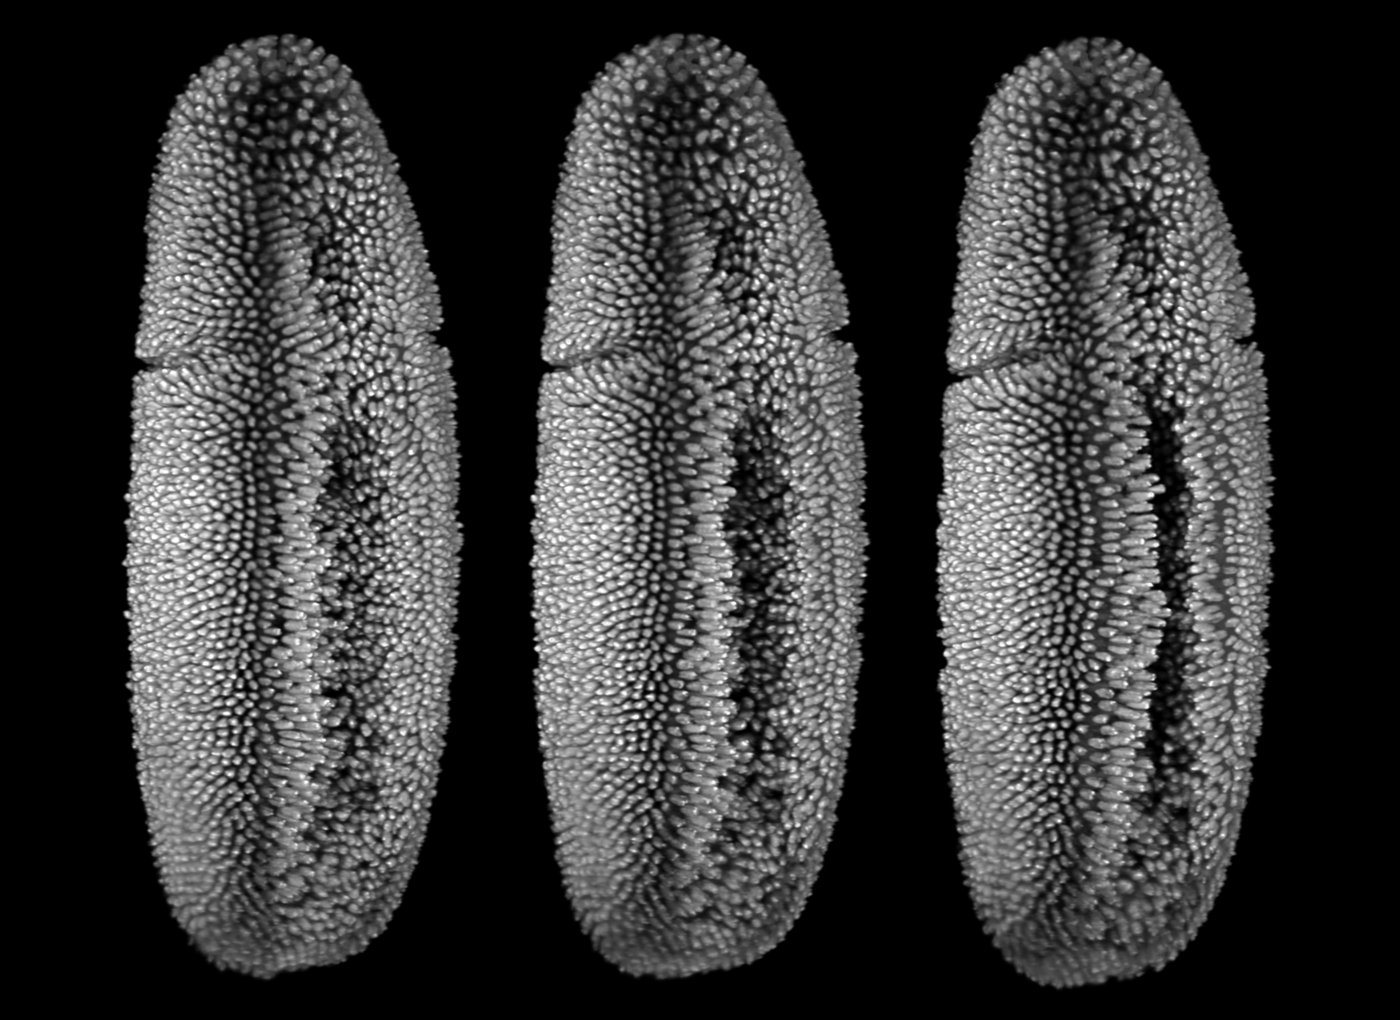 Fruit fly embryonic development